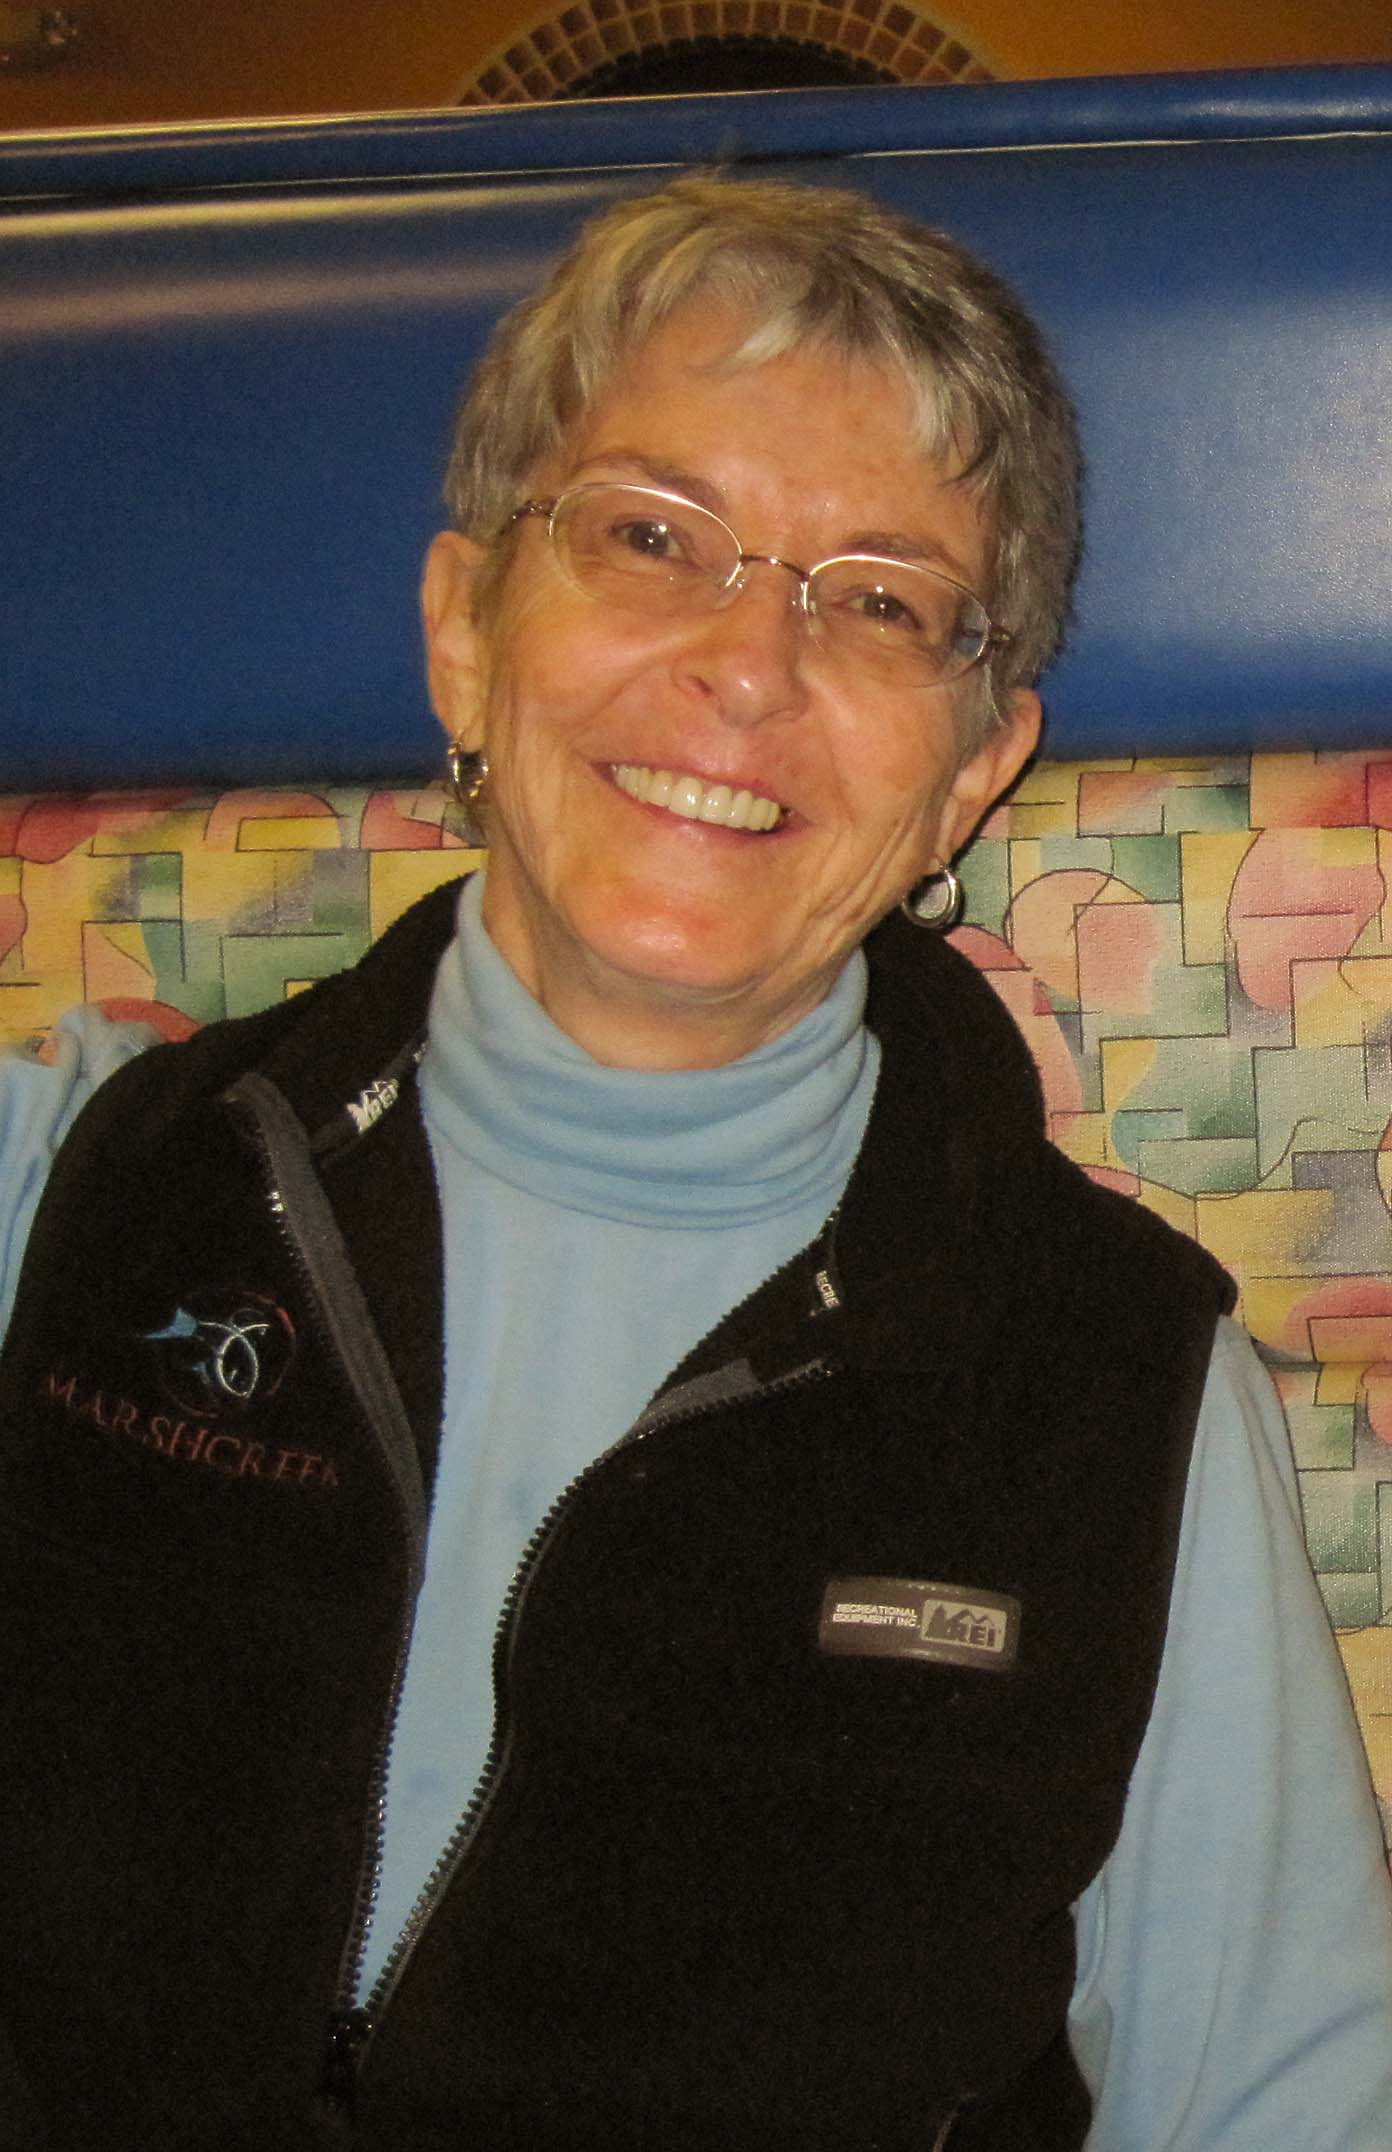 Clarissa Quinlan in glasses and black fleece vest smiles at camera